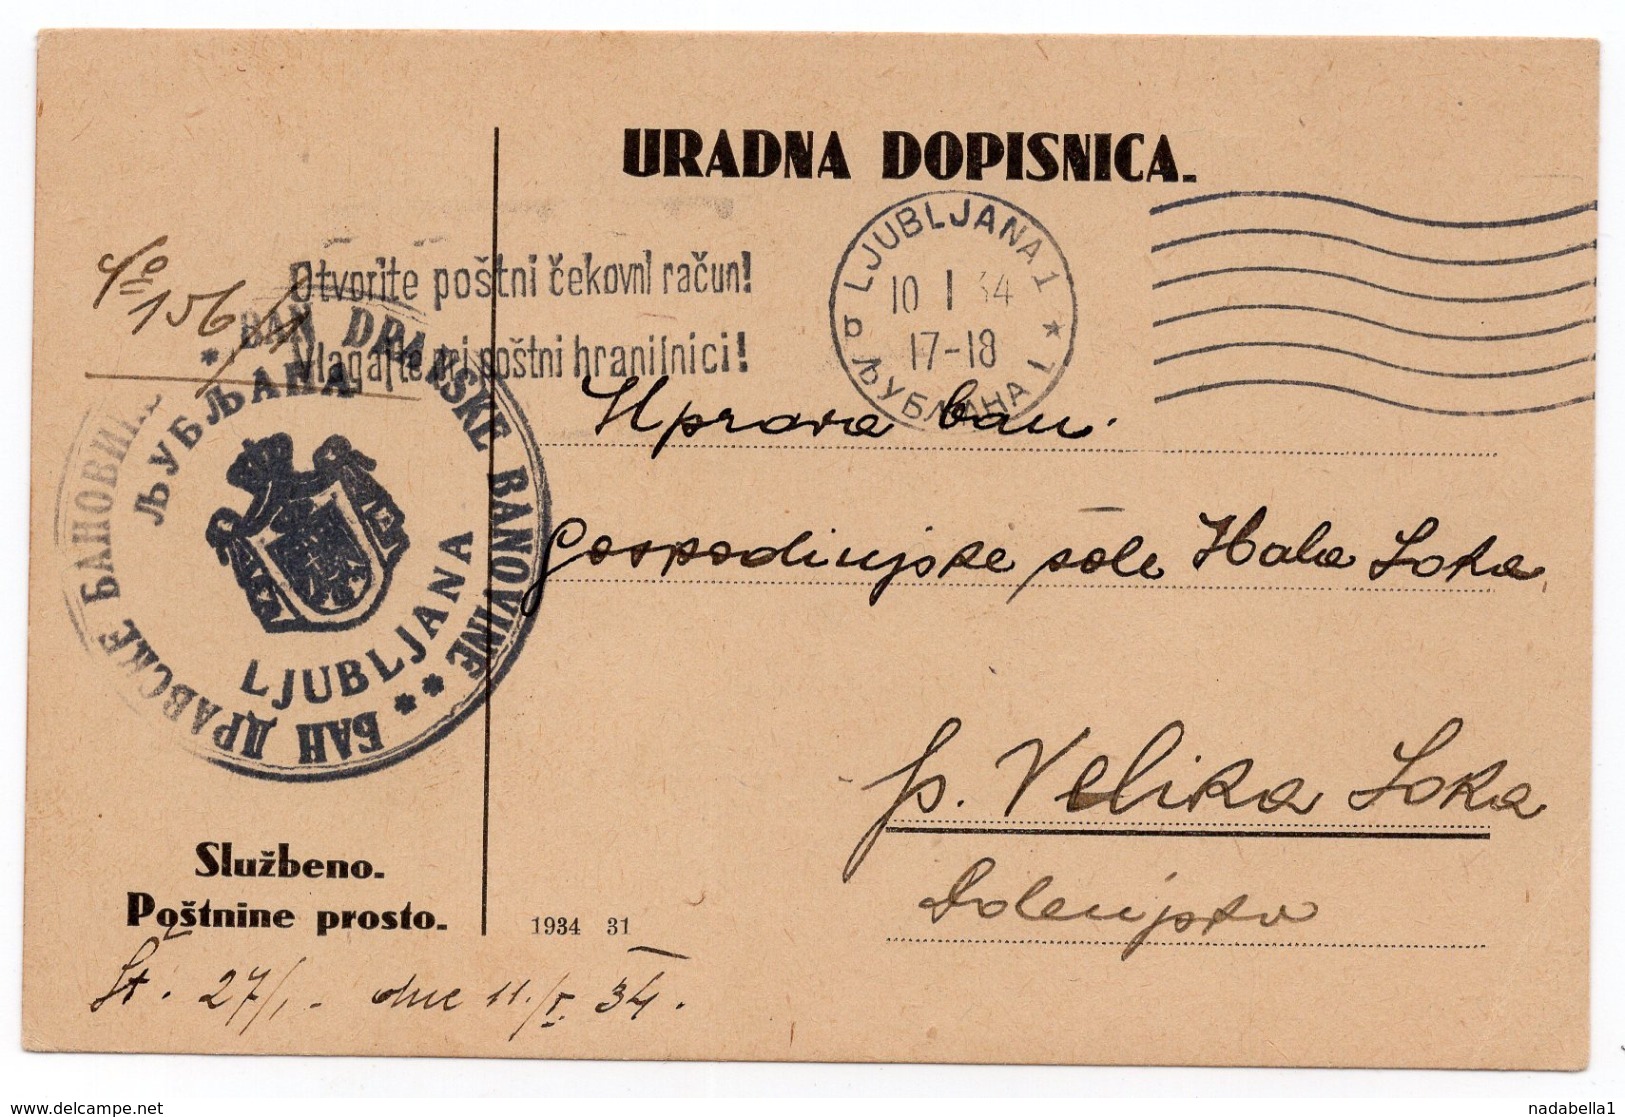 1934 YUGOSLAVIA, SLOVENIA, LJUBLJANA TO VELIKA LOKA, OFFICIAL POSTCARD, FREEPOST - Yugoslavia